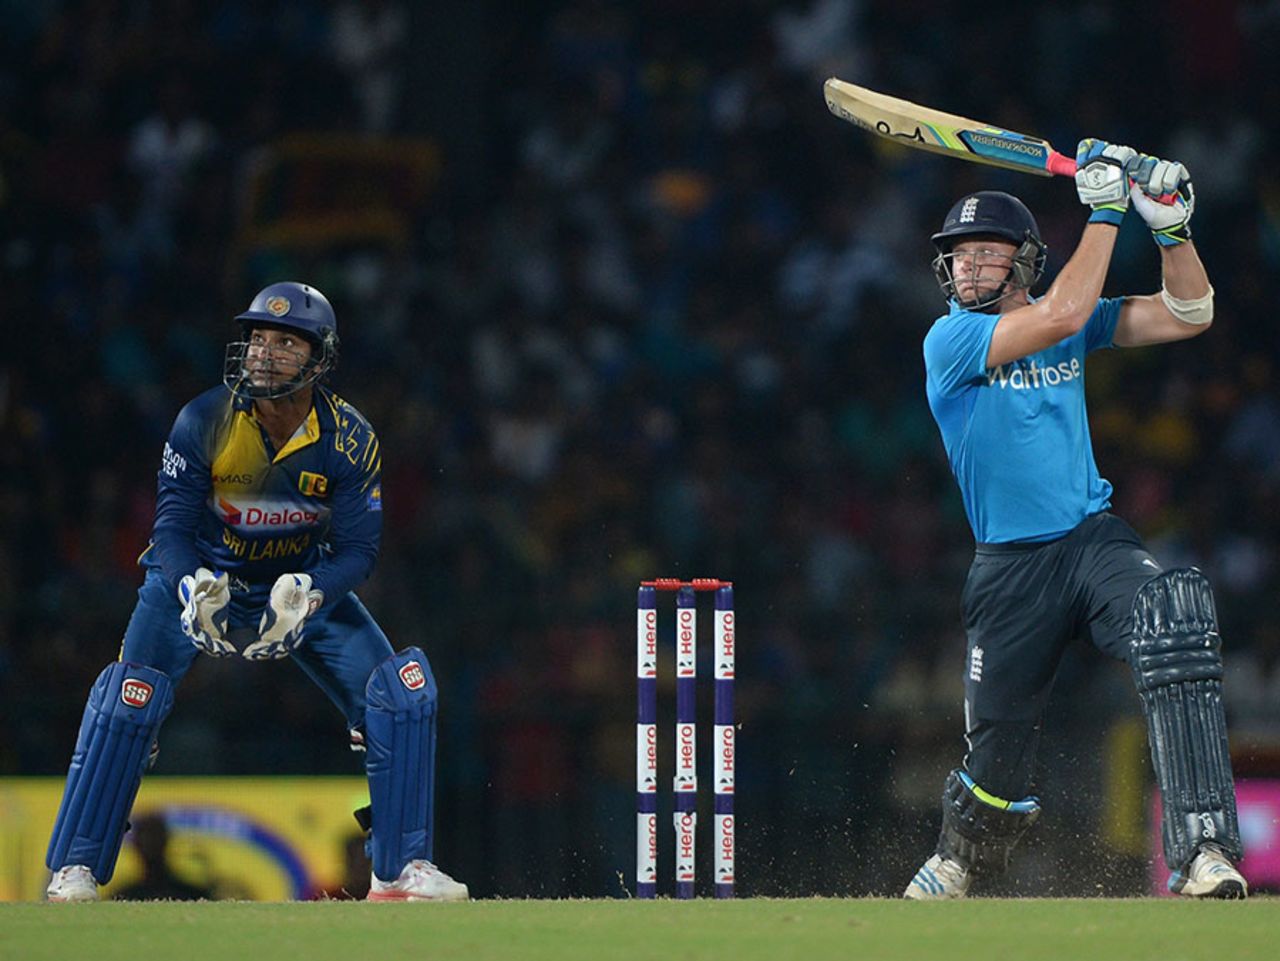 Jos Buttler threatened to get going before finding deep cover, Sri Lanka v England, 7th ODI, Colombo, December 16, 2014